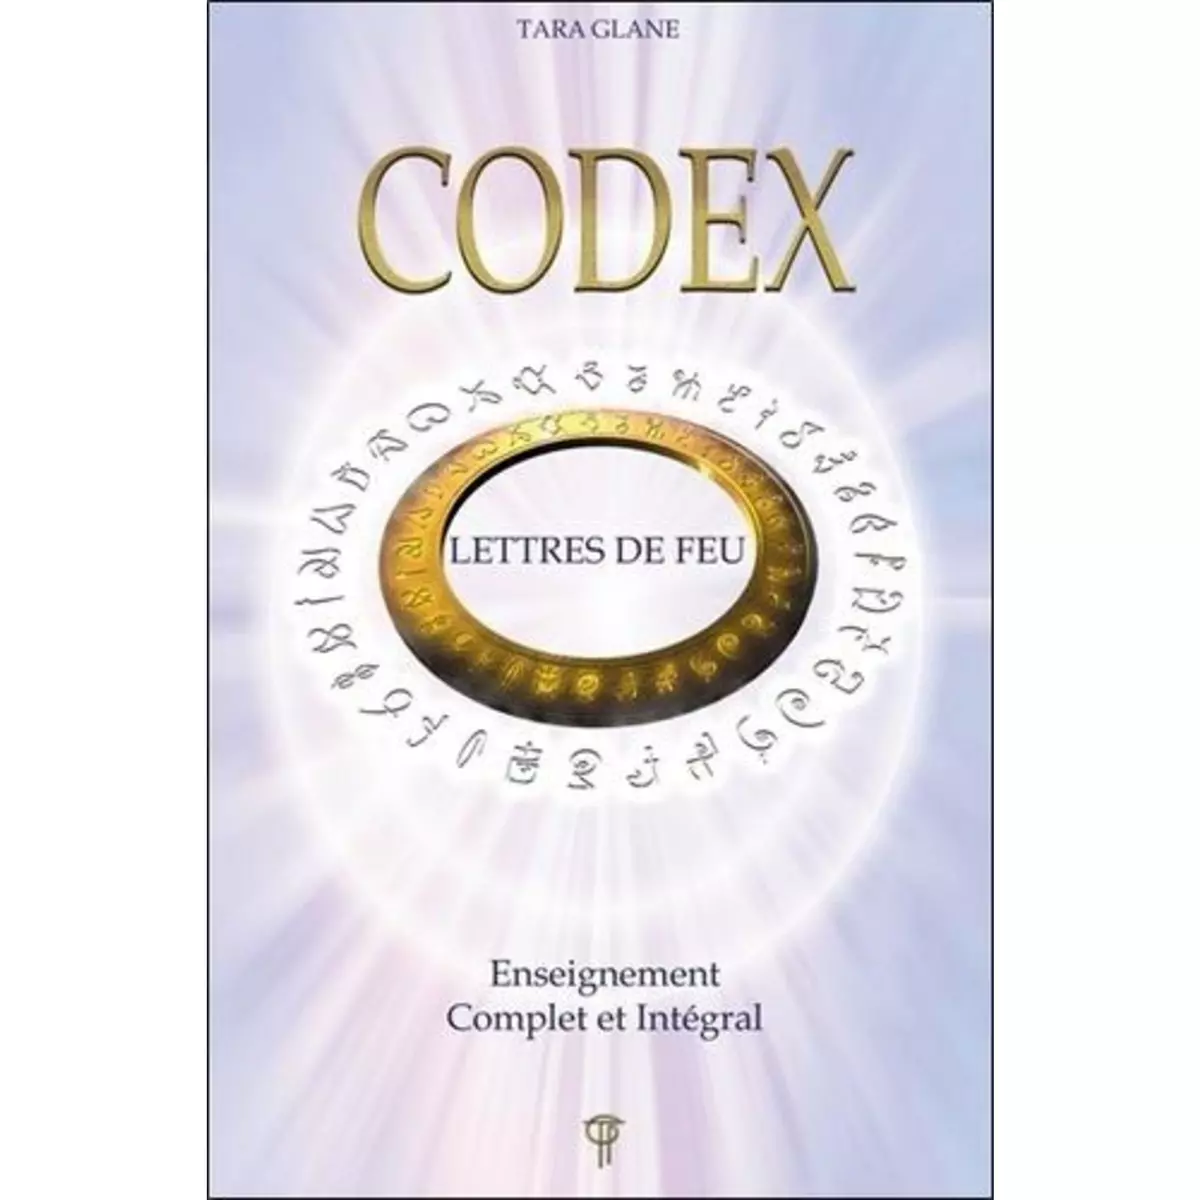  CODEX, LETTRES DE FEU. ENSEIGNEMENT COMPLET ET INTEGRAL, Glane Tara